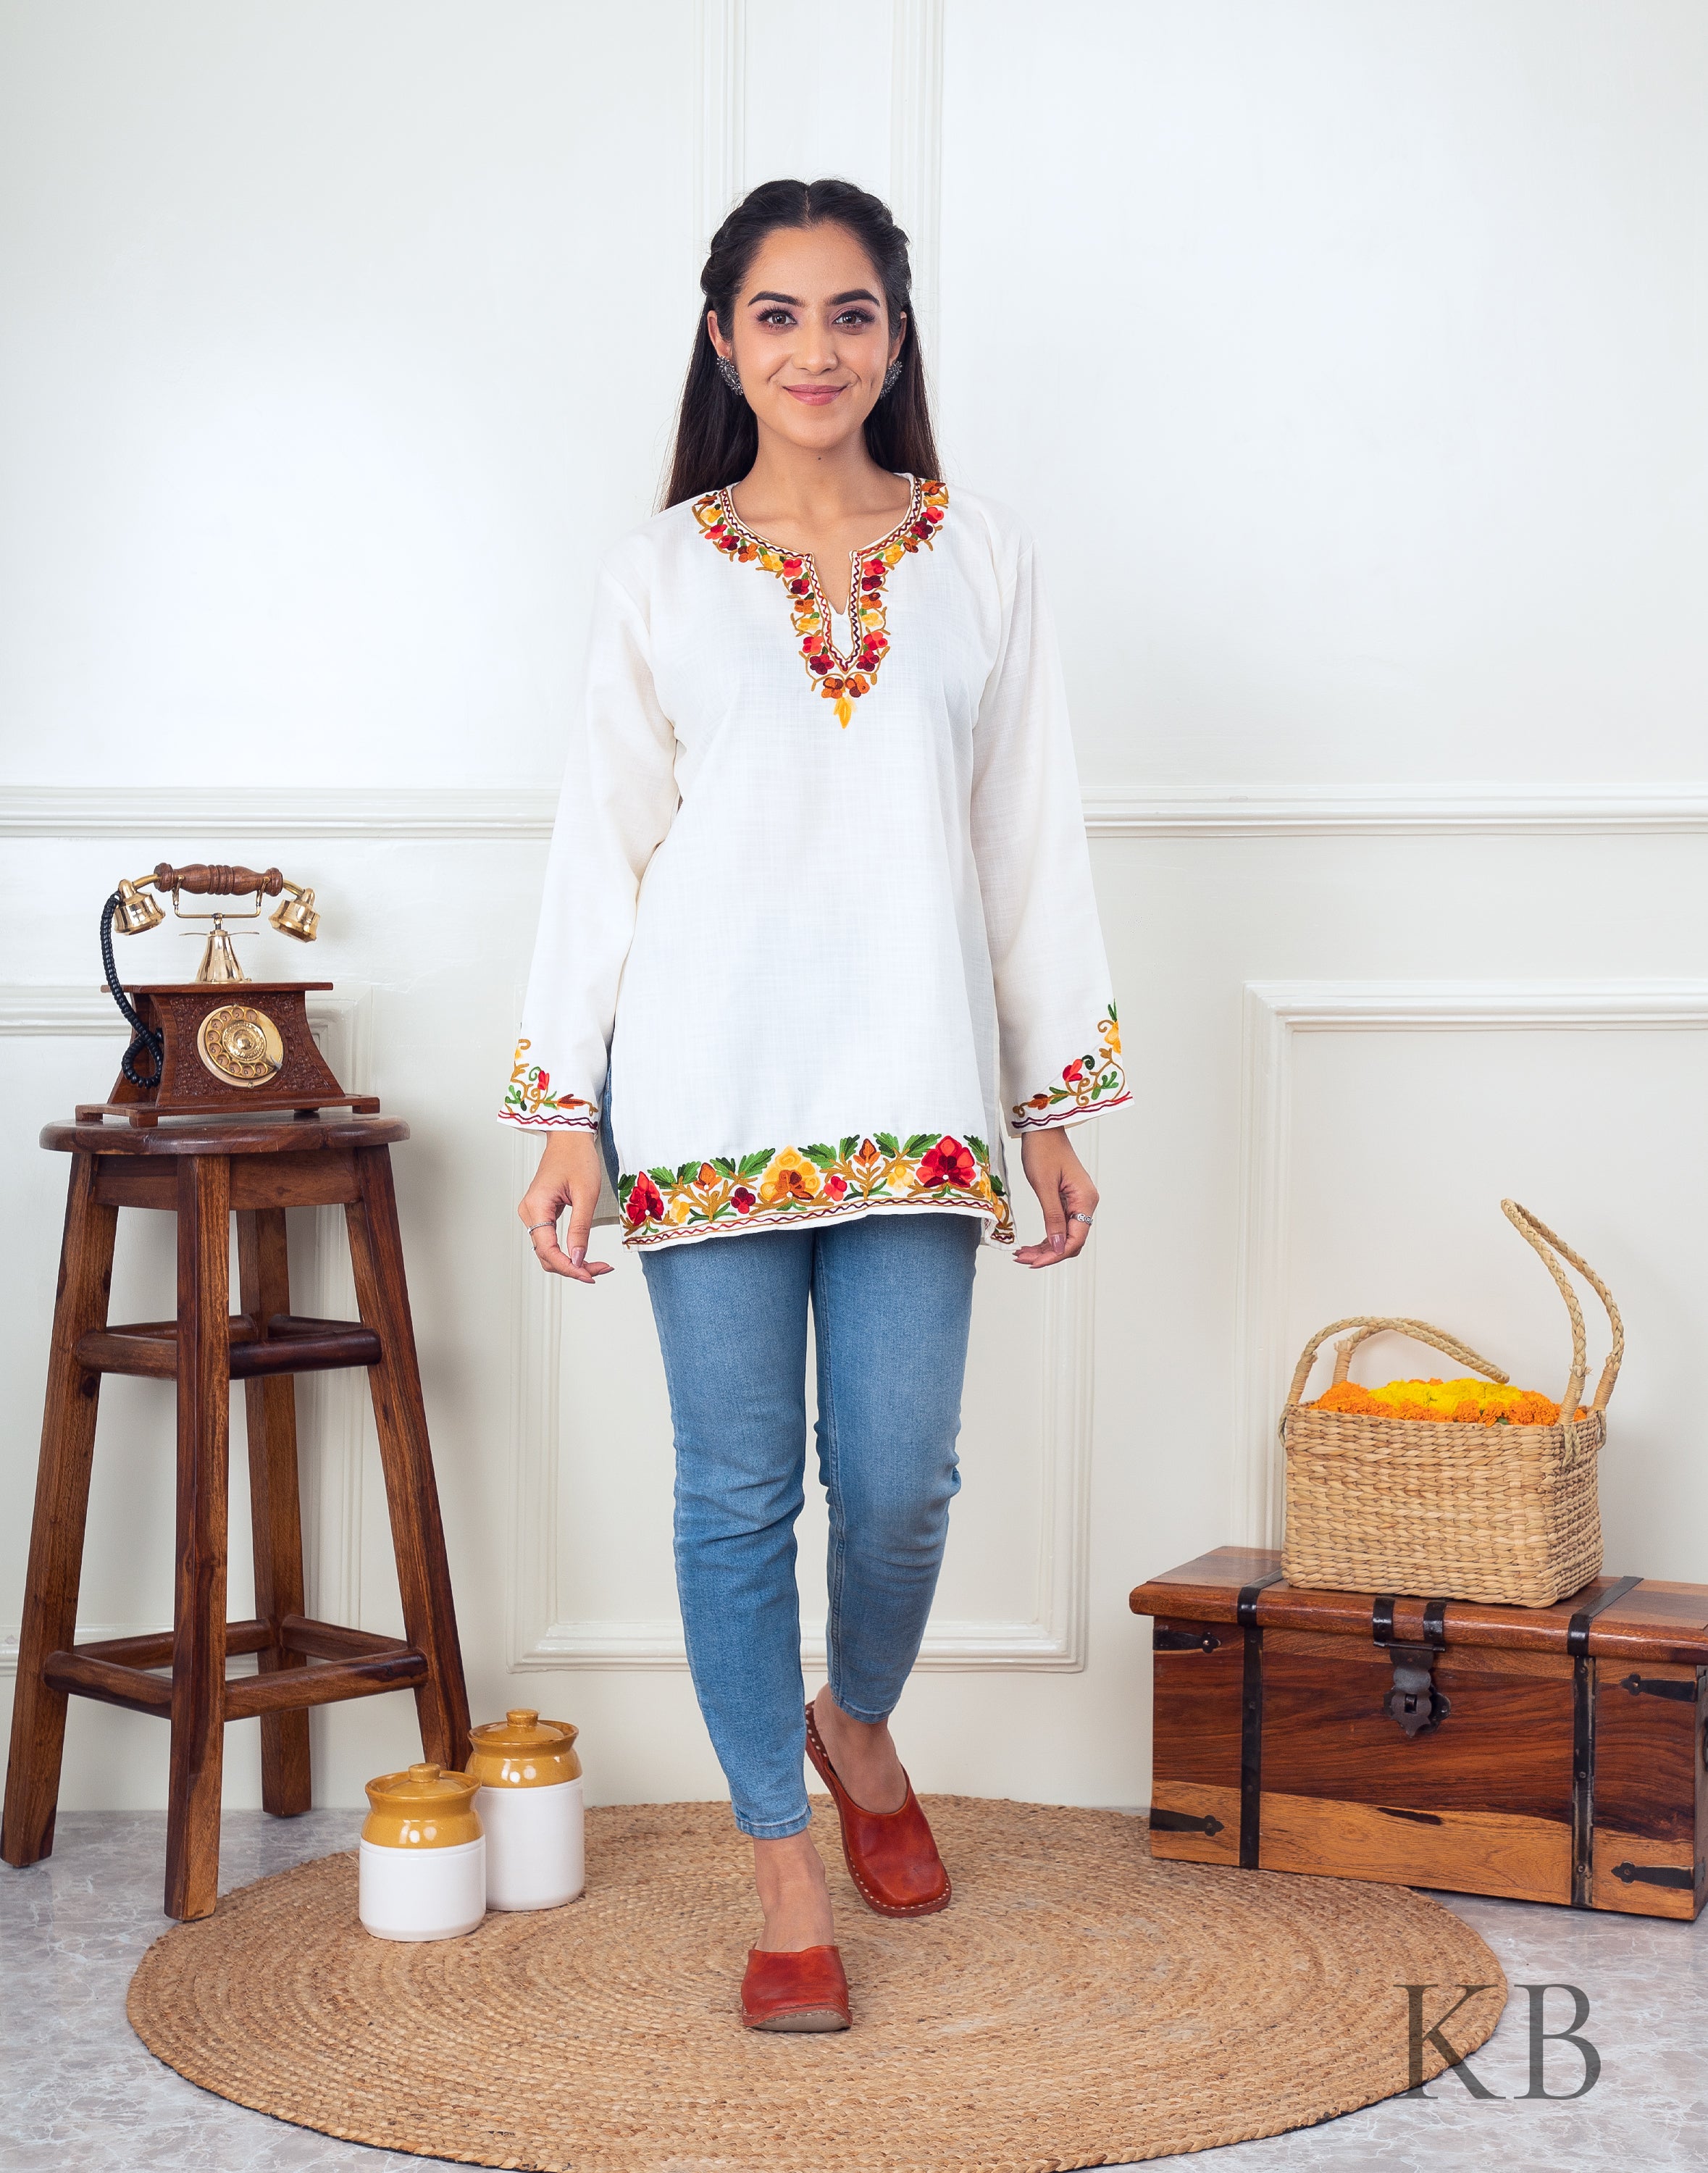 Buy Shalinindia Handmade Embroidered Kurti Tunic - Authentic Kurtis - Kurti  Tops for Women - Size L White at Amazon.in